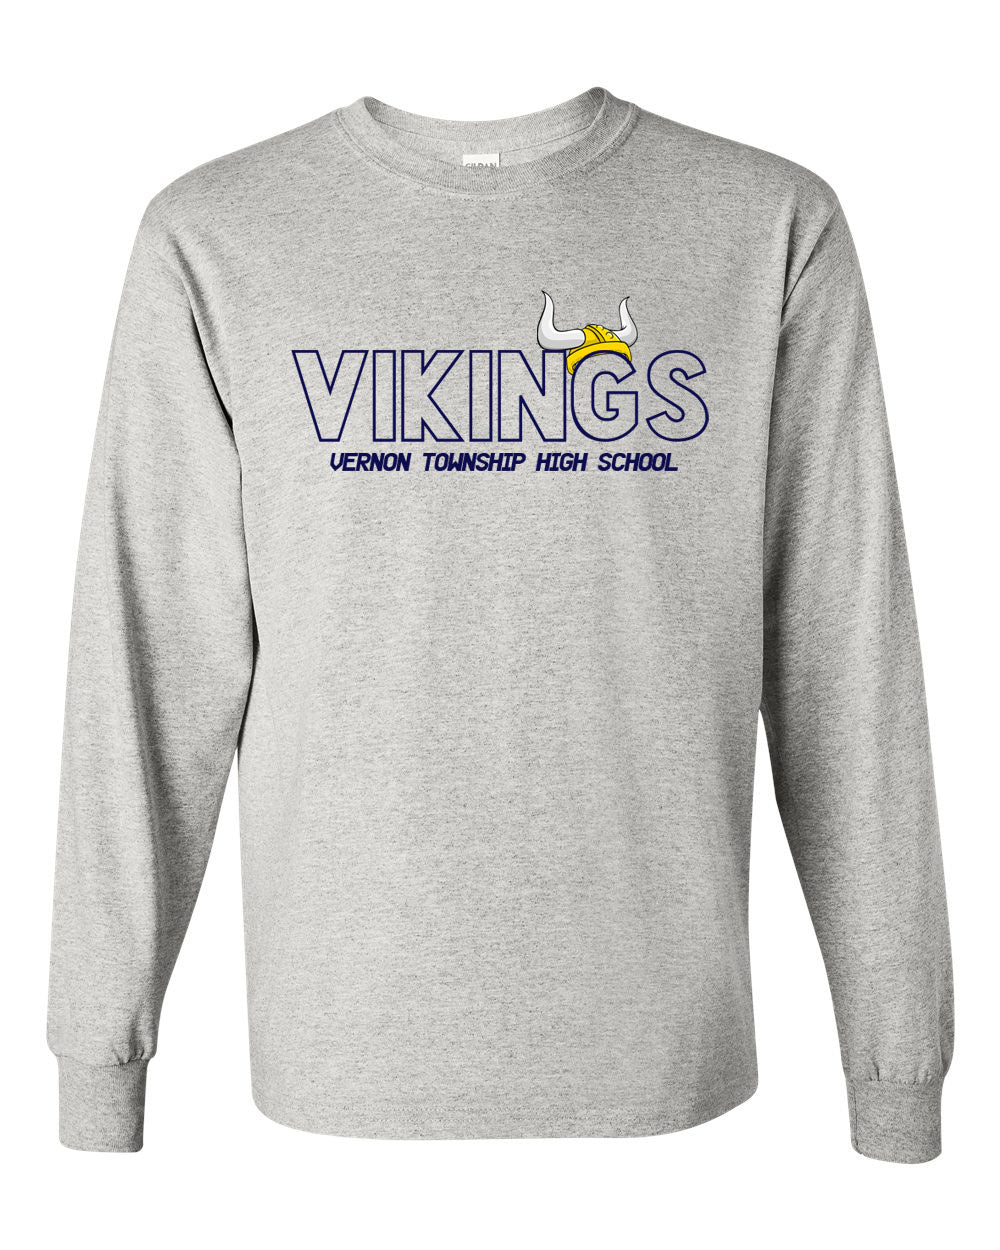 VTHS Design 13 Long Sleeve Shirt